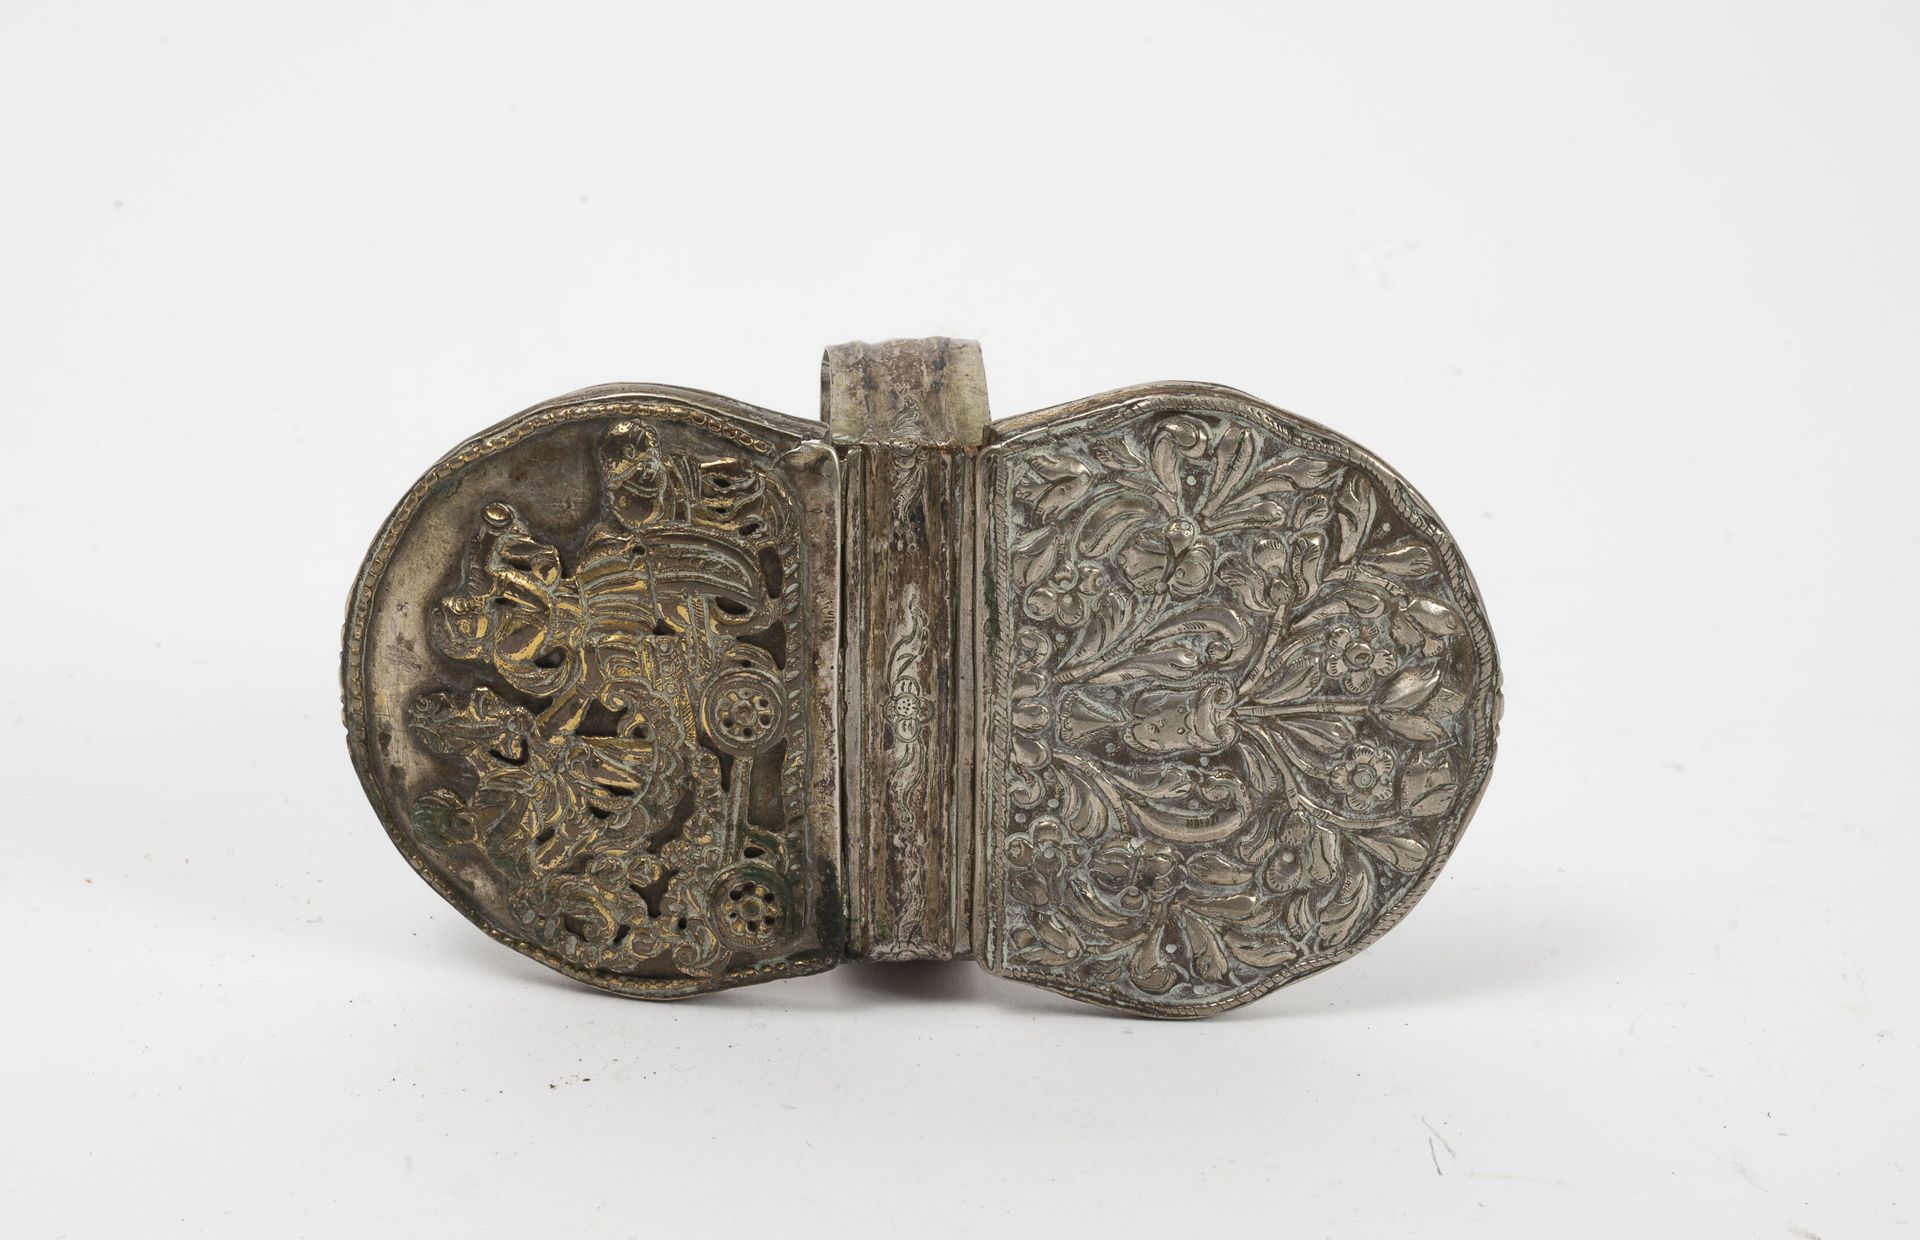 PAYS BAS (?), XVIIIème siècle Snuffbox (?) in silver plated metal, horseshoe-sha&hellip;